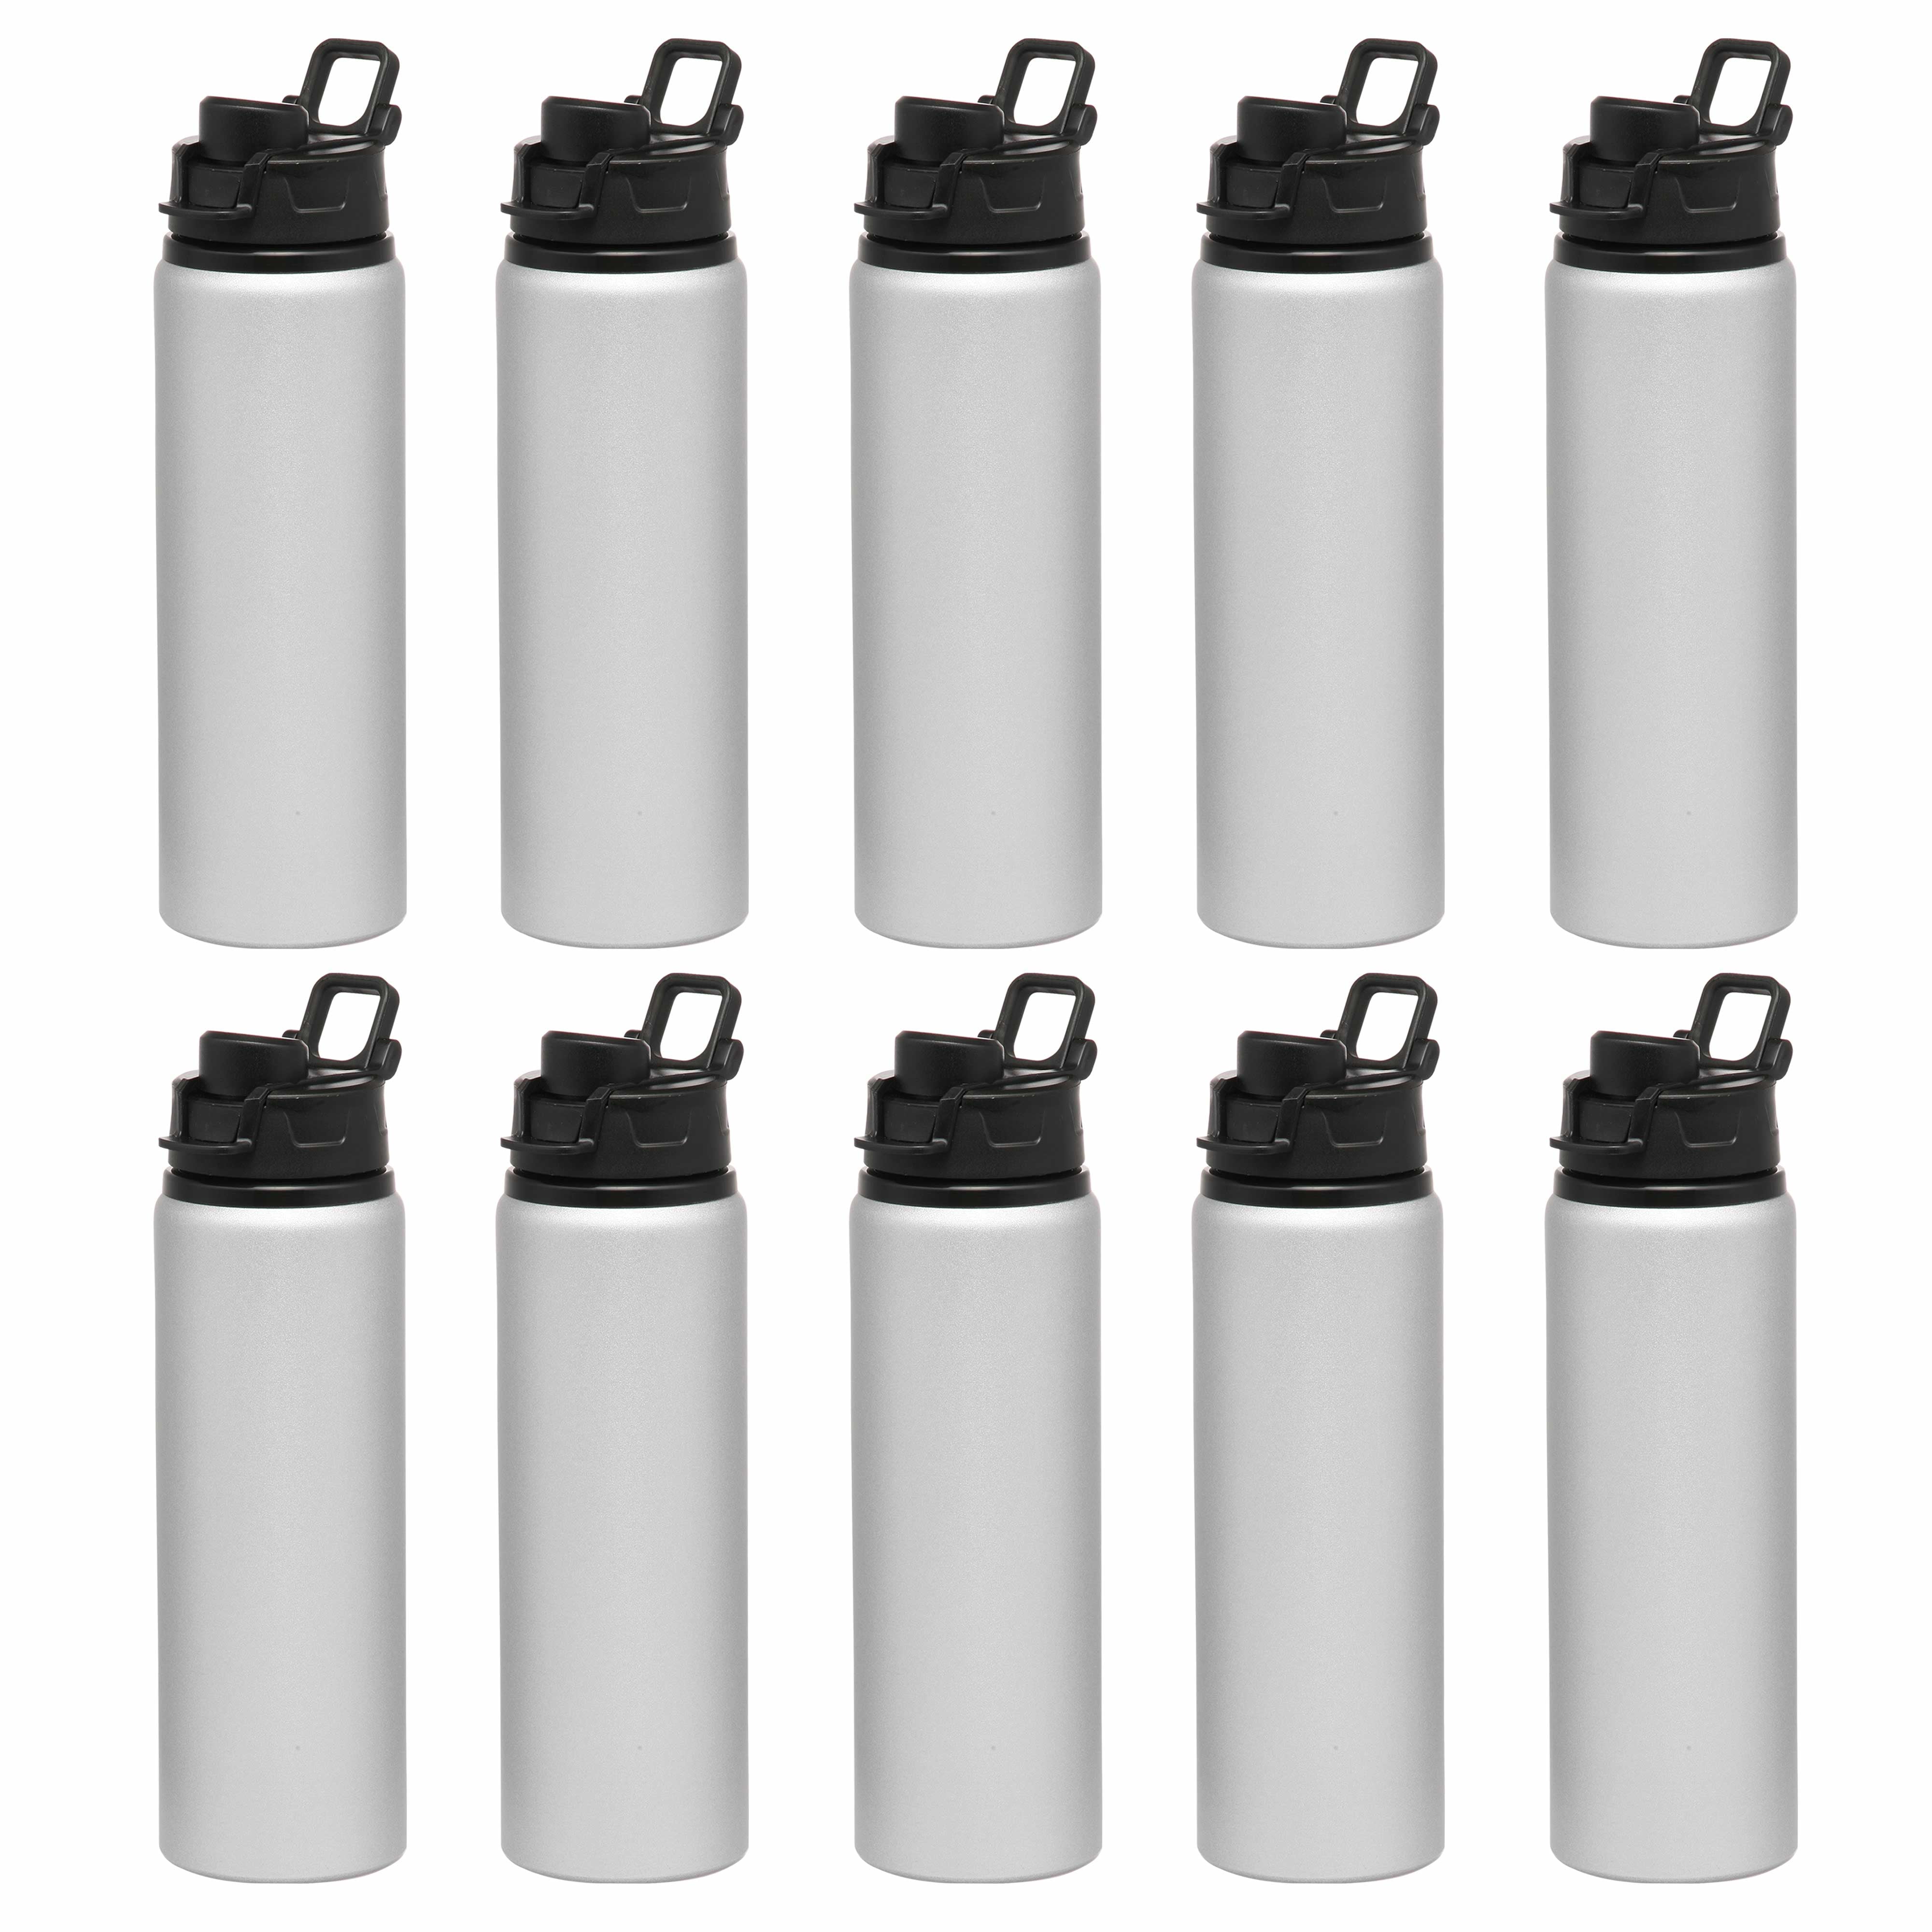 10 Pcs 17oz Reusable Aluminum Water Bottles Bulk Multicolor Outdoor Sports  Water Bottles Multipack T…See more 10 Pcs 17oz Reusable Aluminum Water